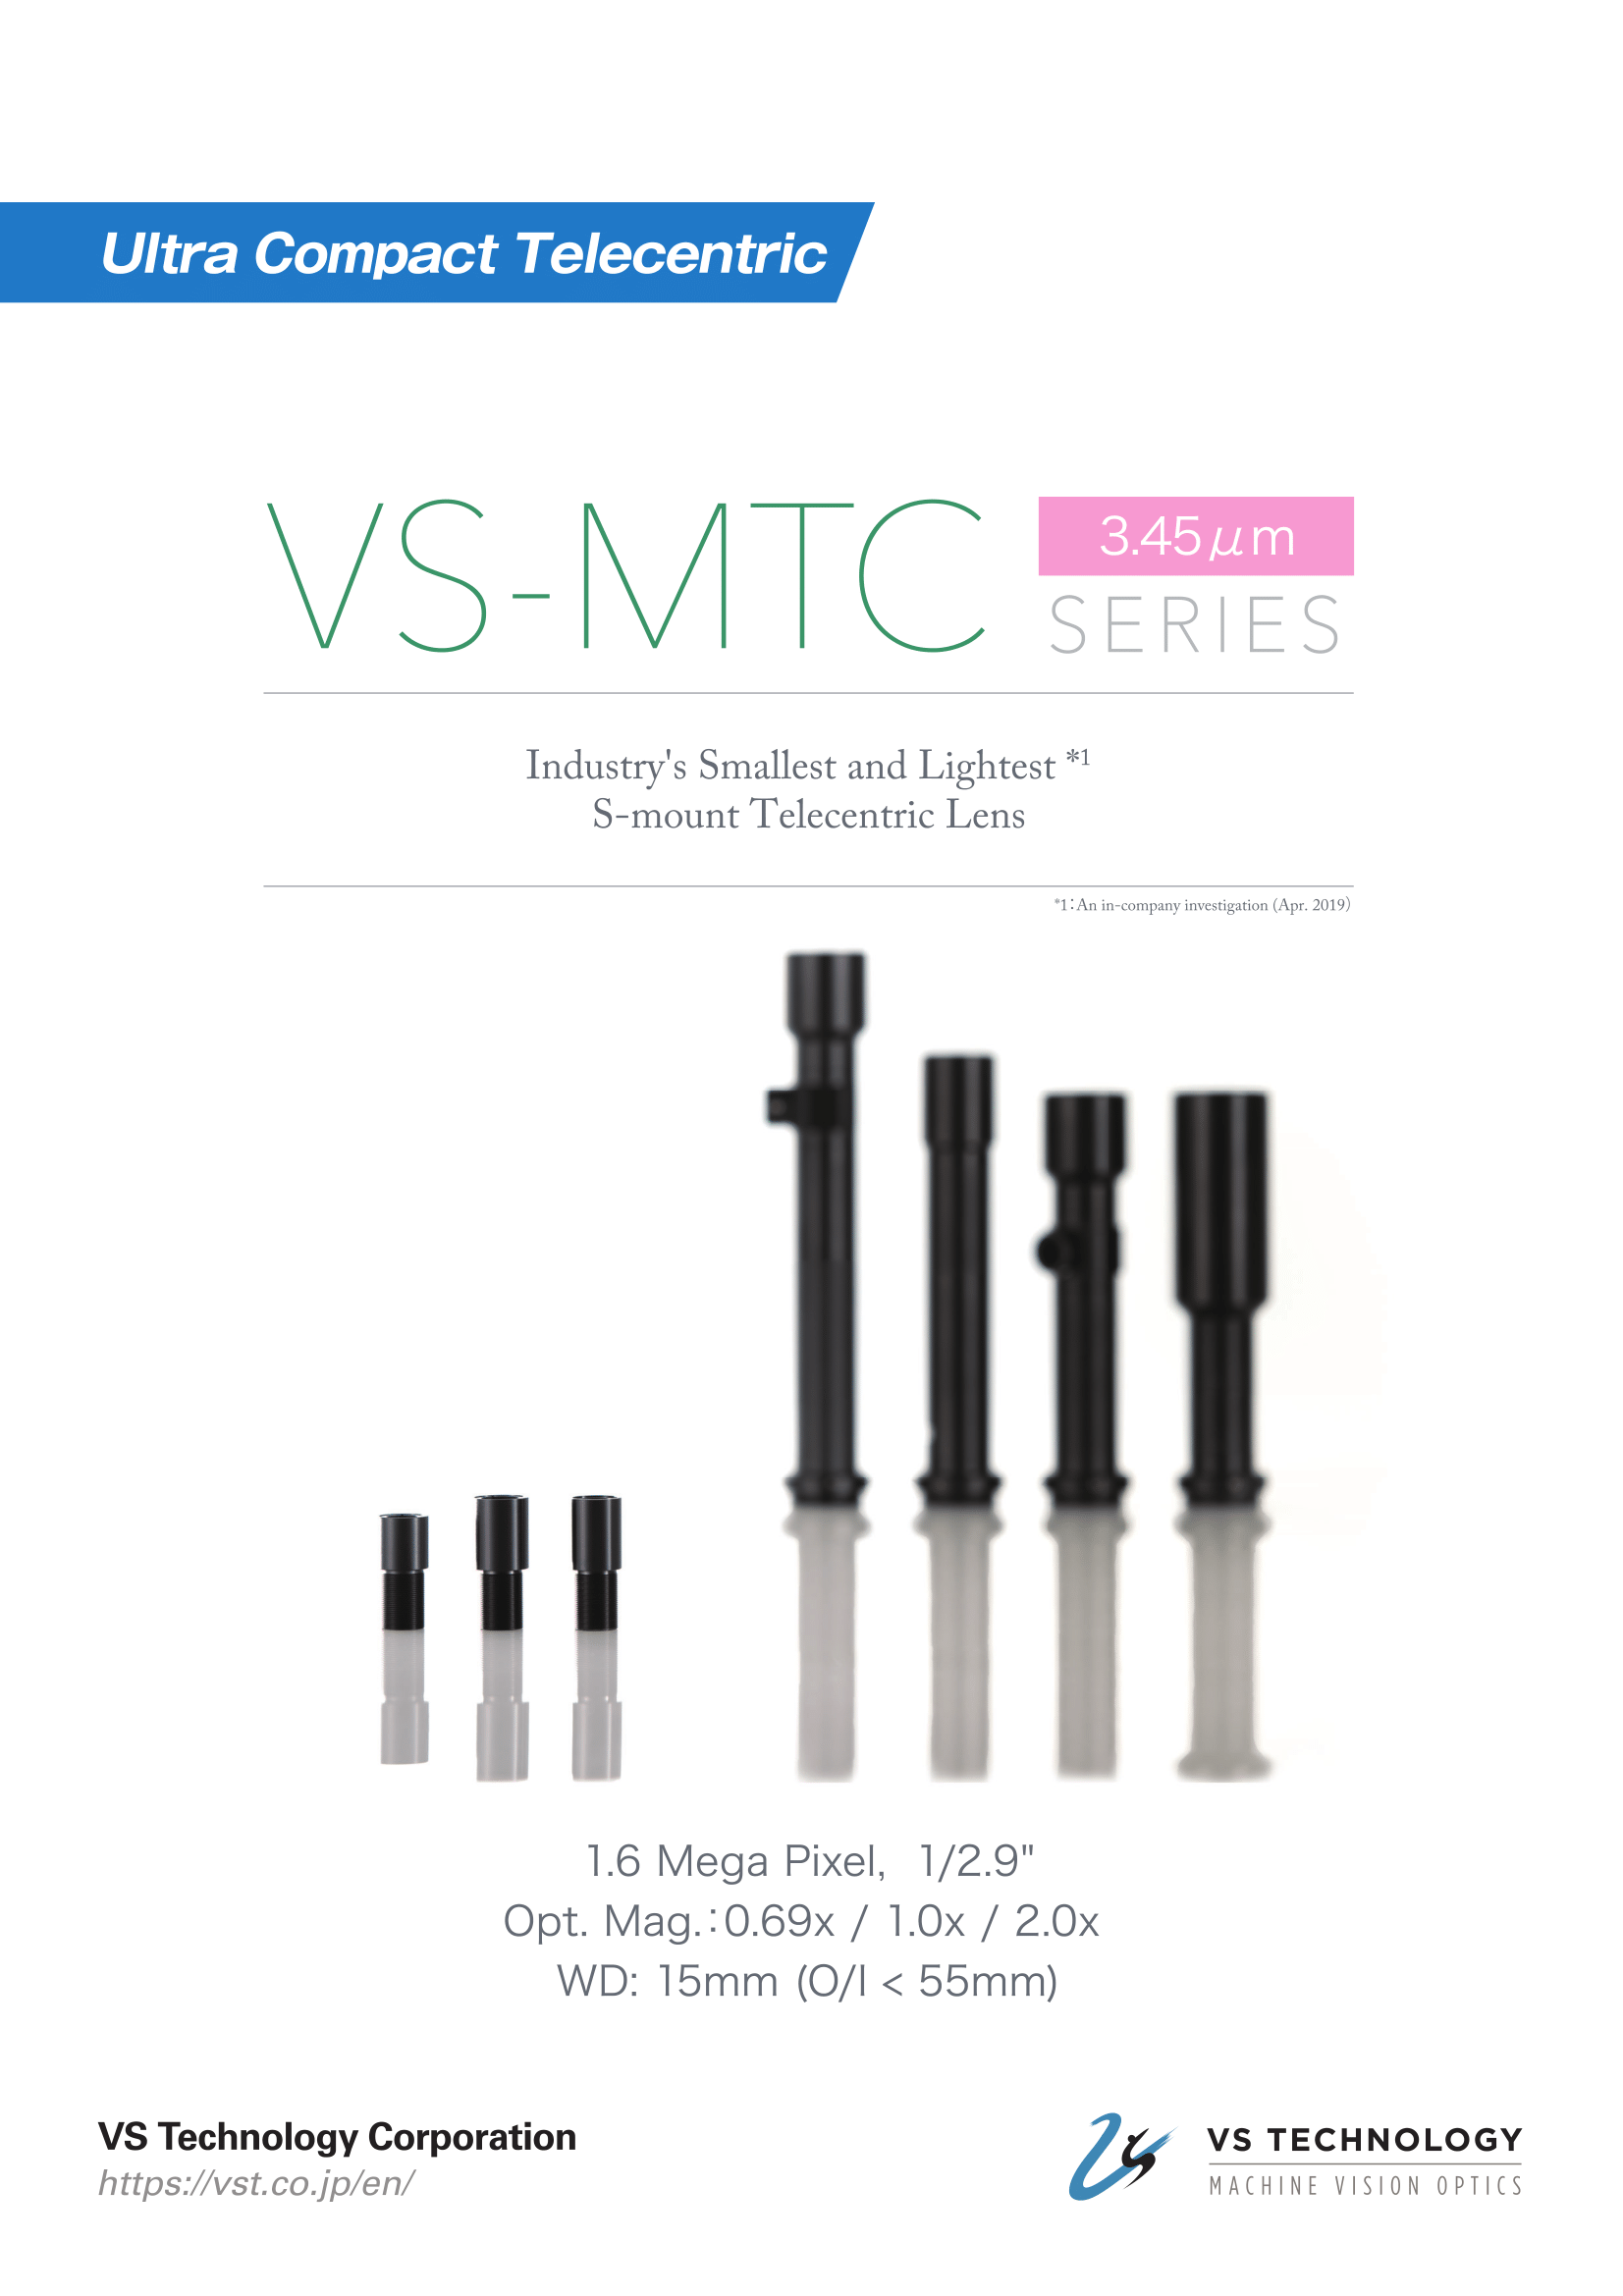 VS-MTC Series